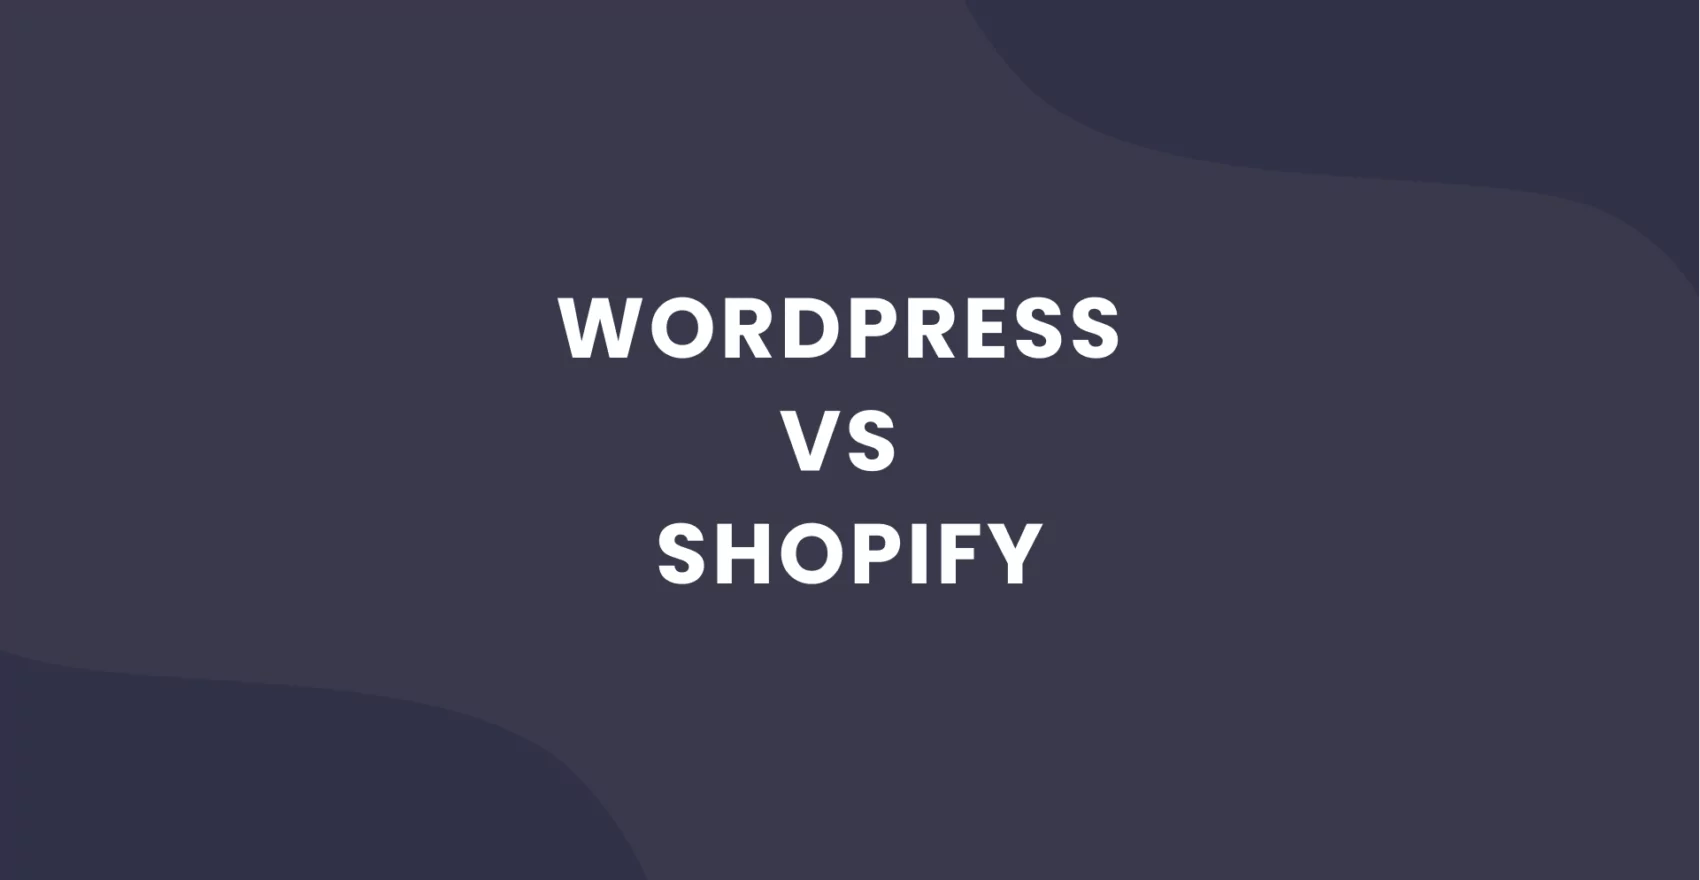 WordPress vs Shopify: Which Online Store Platform Is Better?